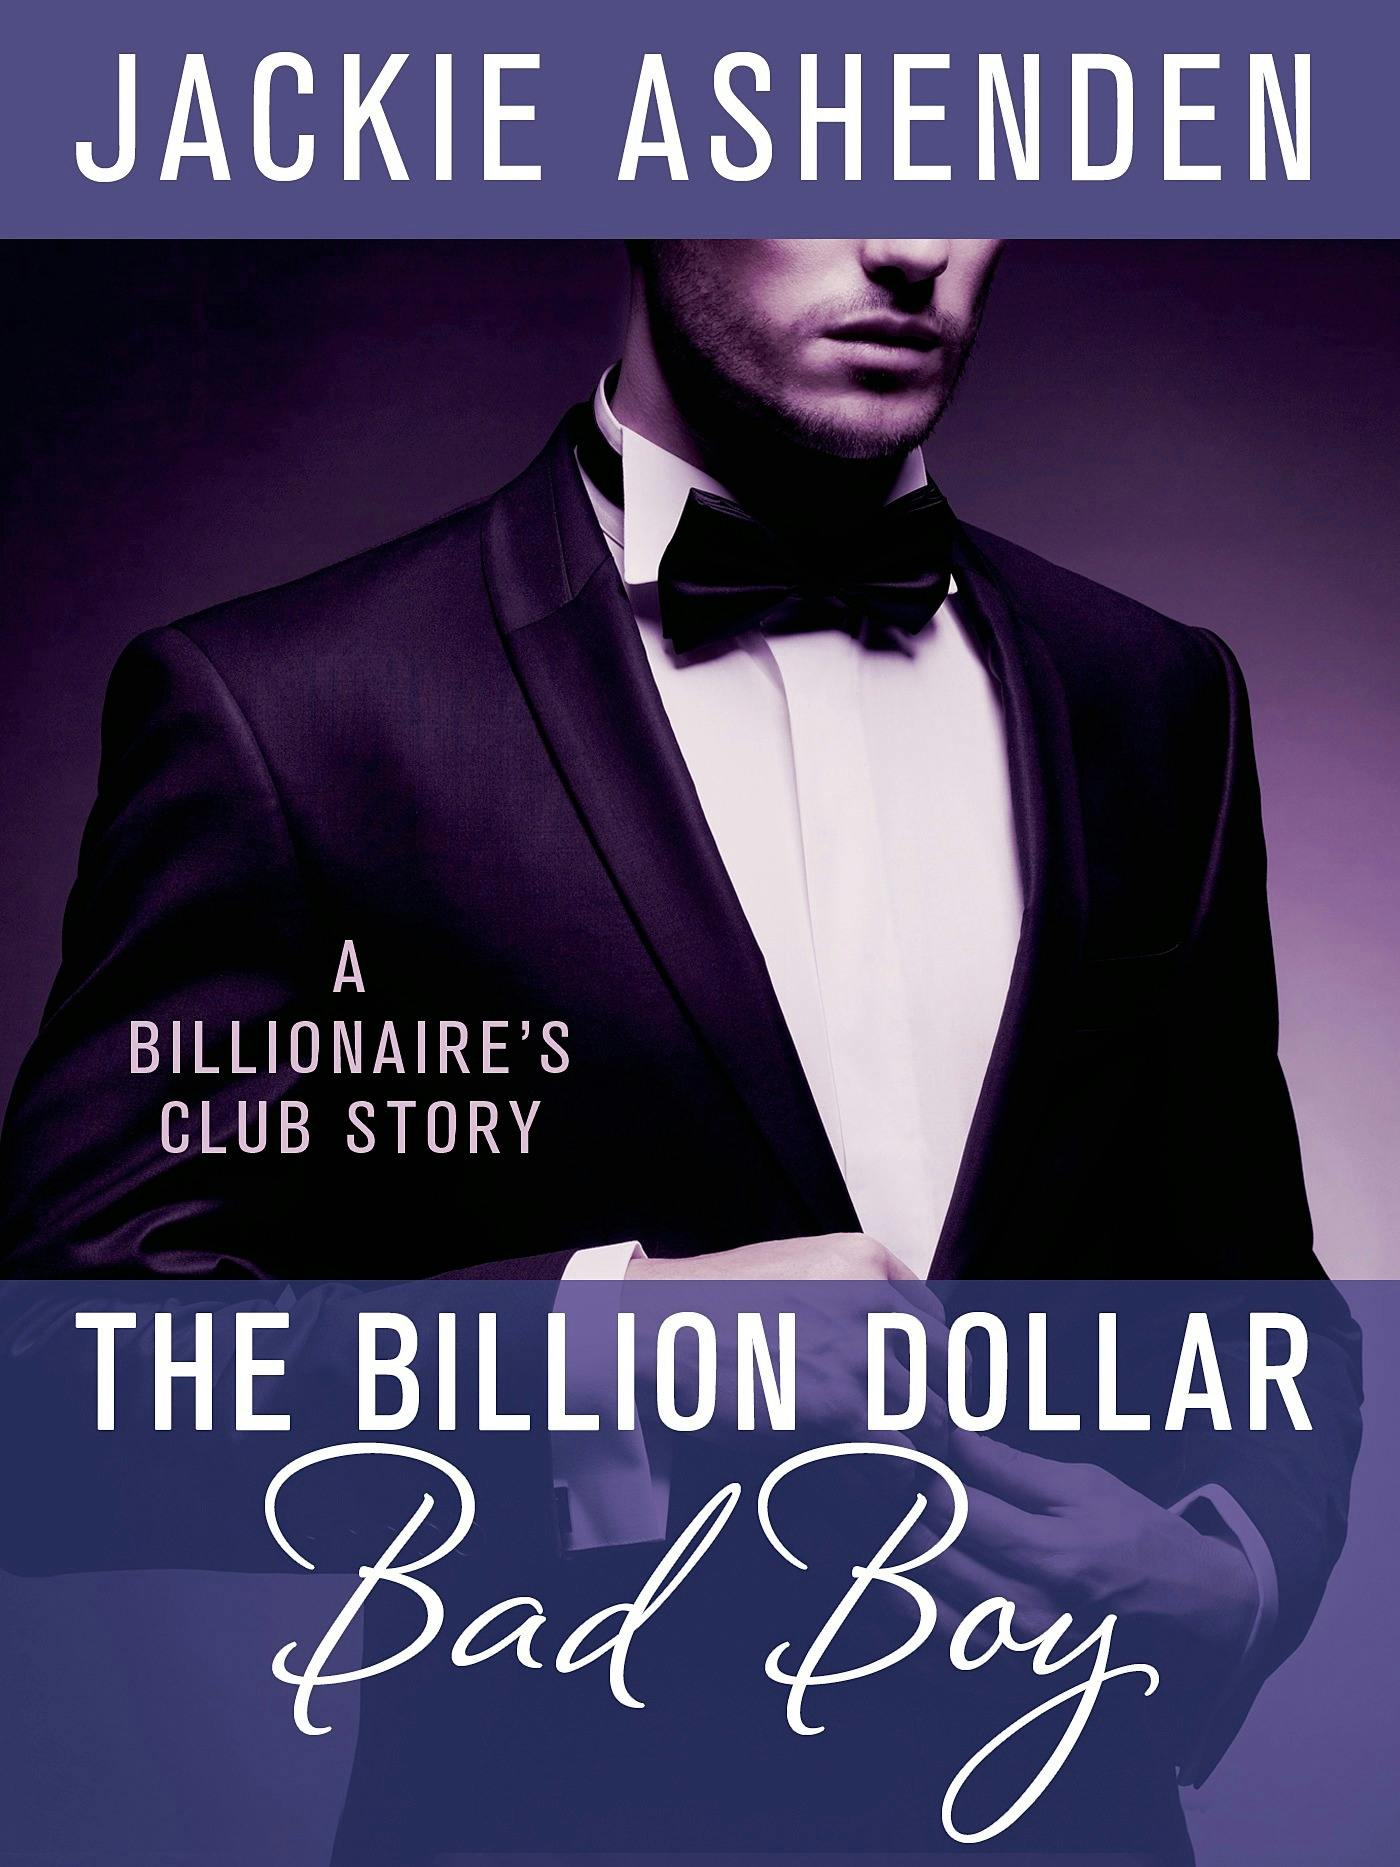 The Billion Dollar Bad Boy